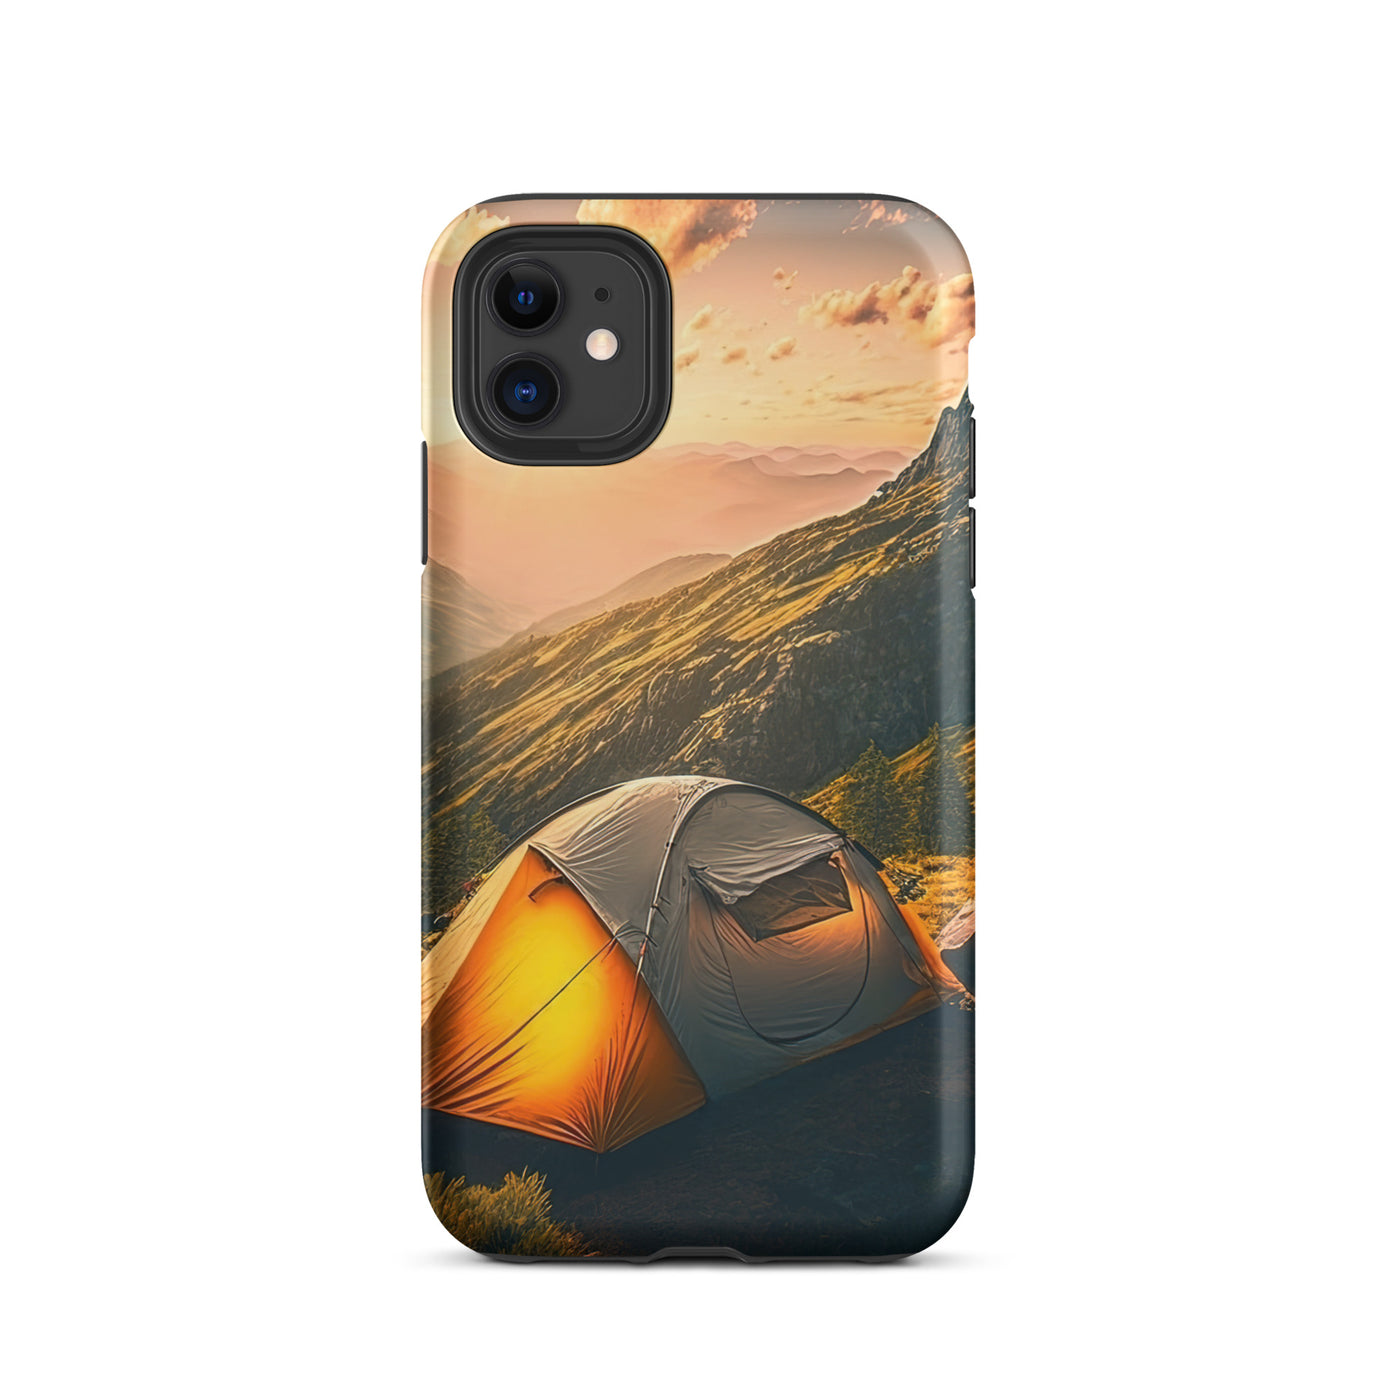 Zelt auf Berg im Sonnenaufgang - Landschafts - iPhone Schutzhülle (robust) camping xxx iPhone 11